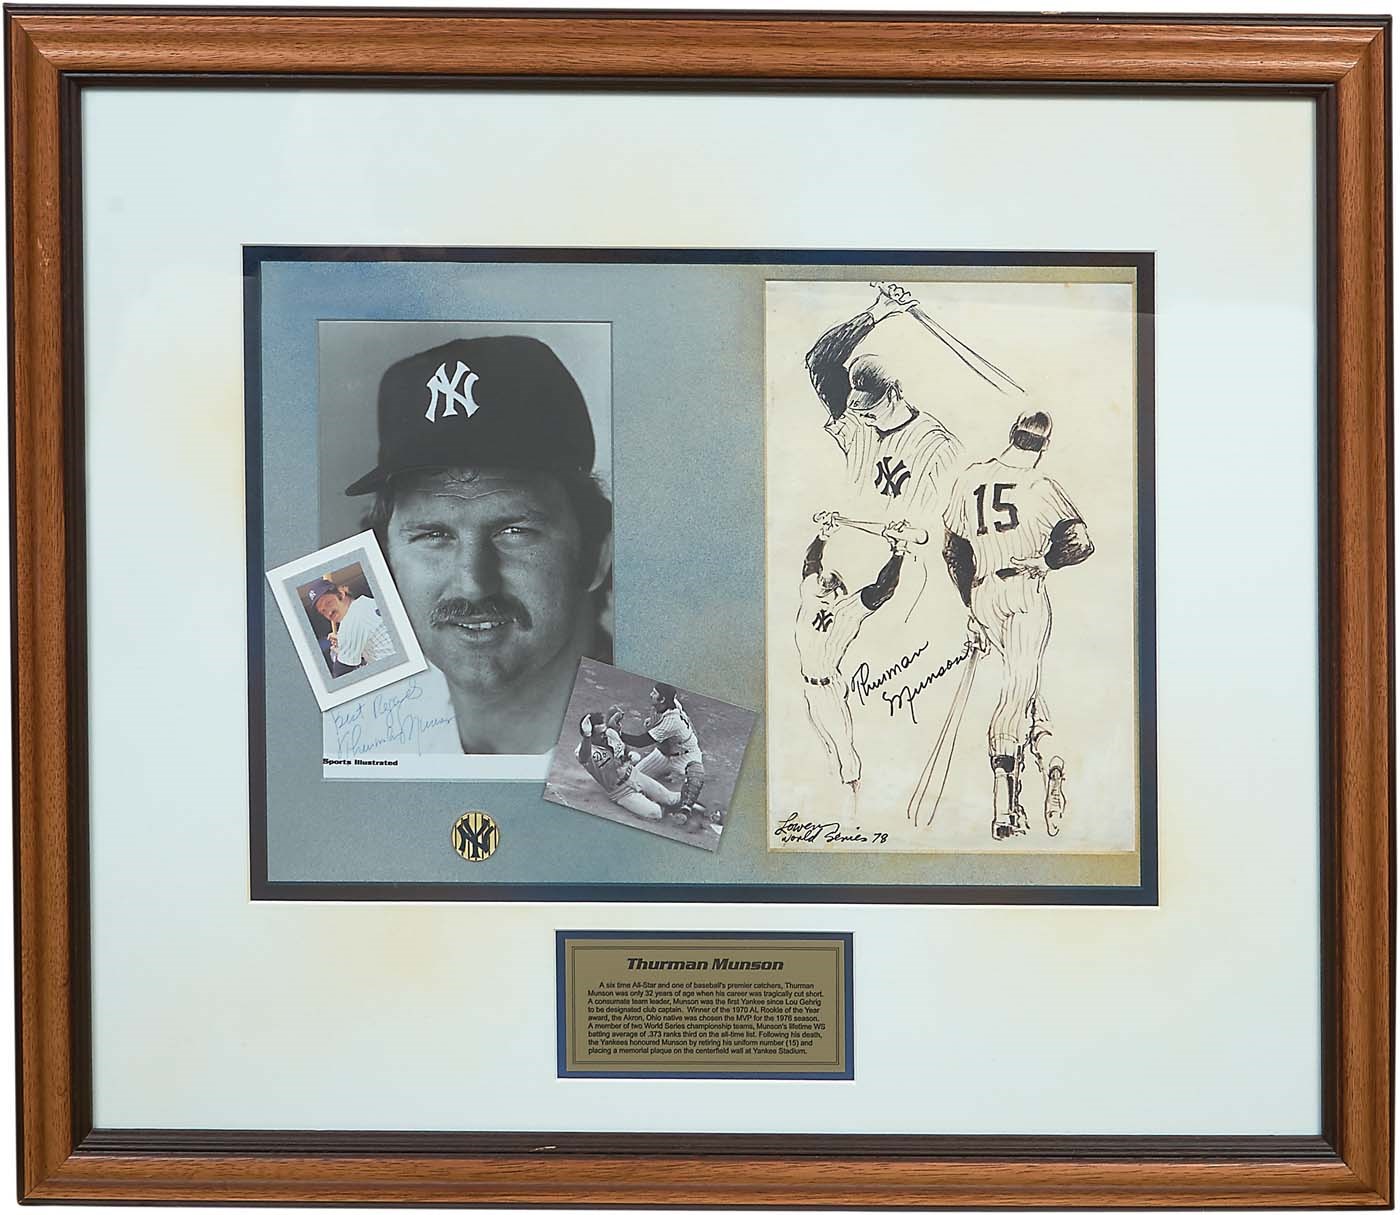 NY Yankees, Giants & Mets - Thurman Munson Signed Artwork & Signed Photo Display (PSA)